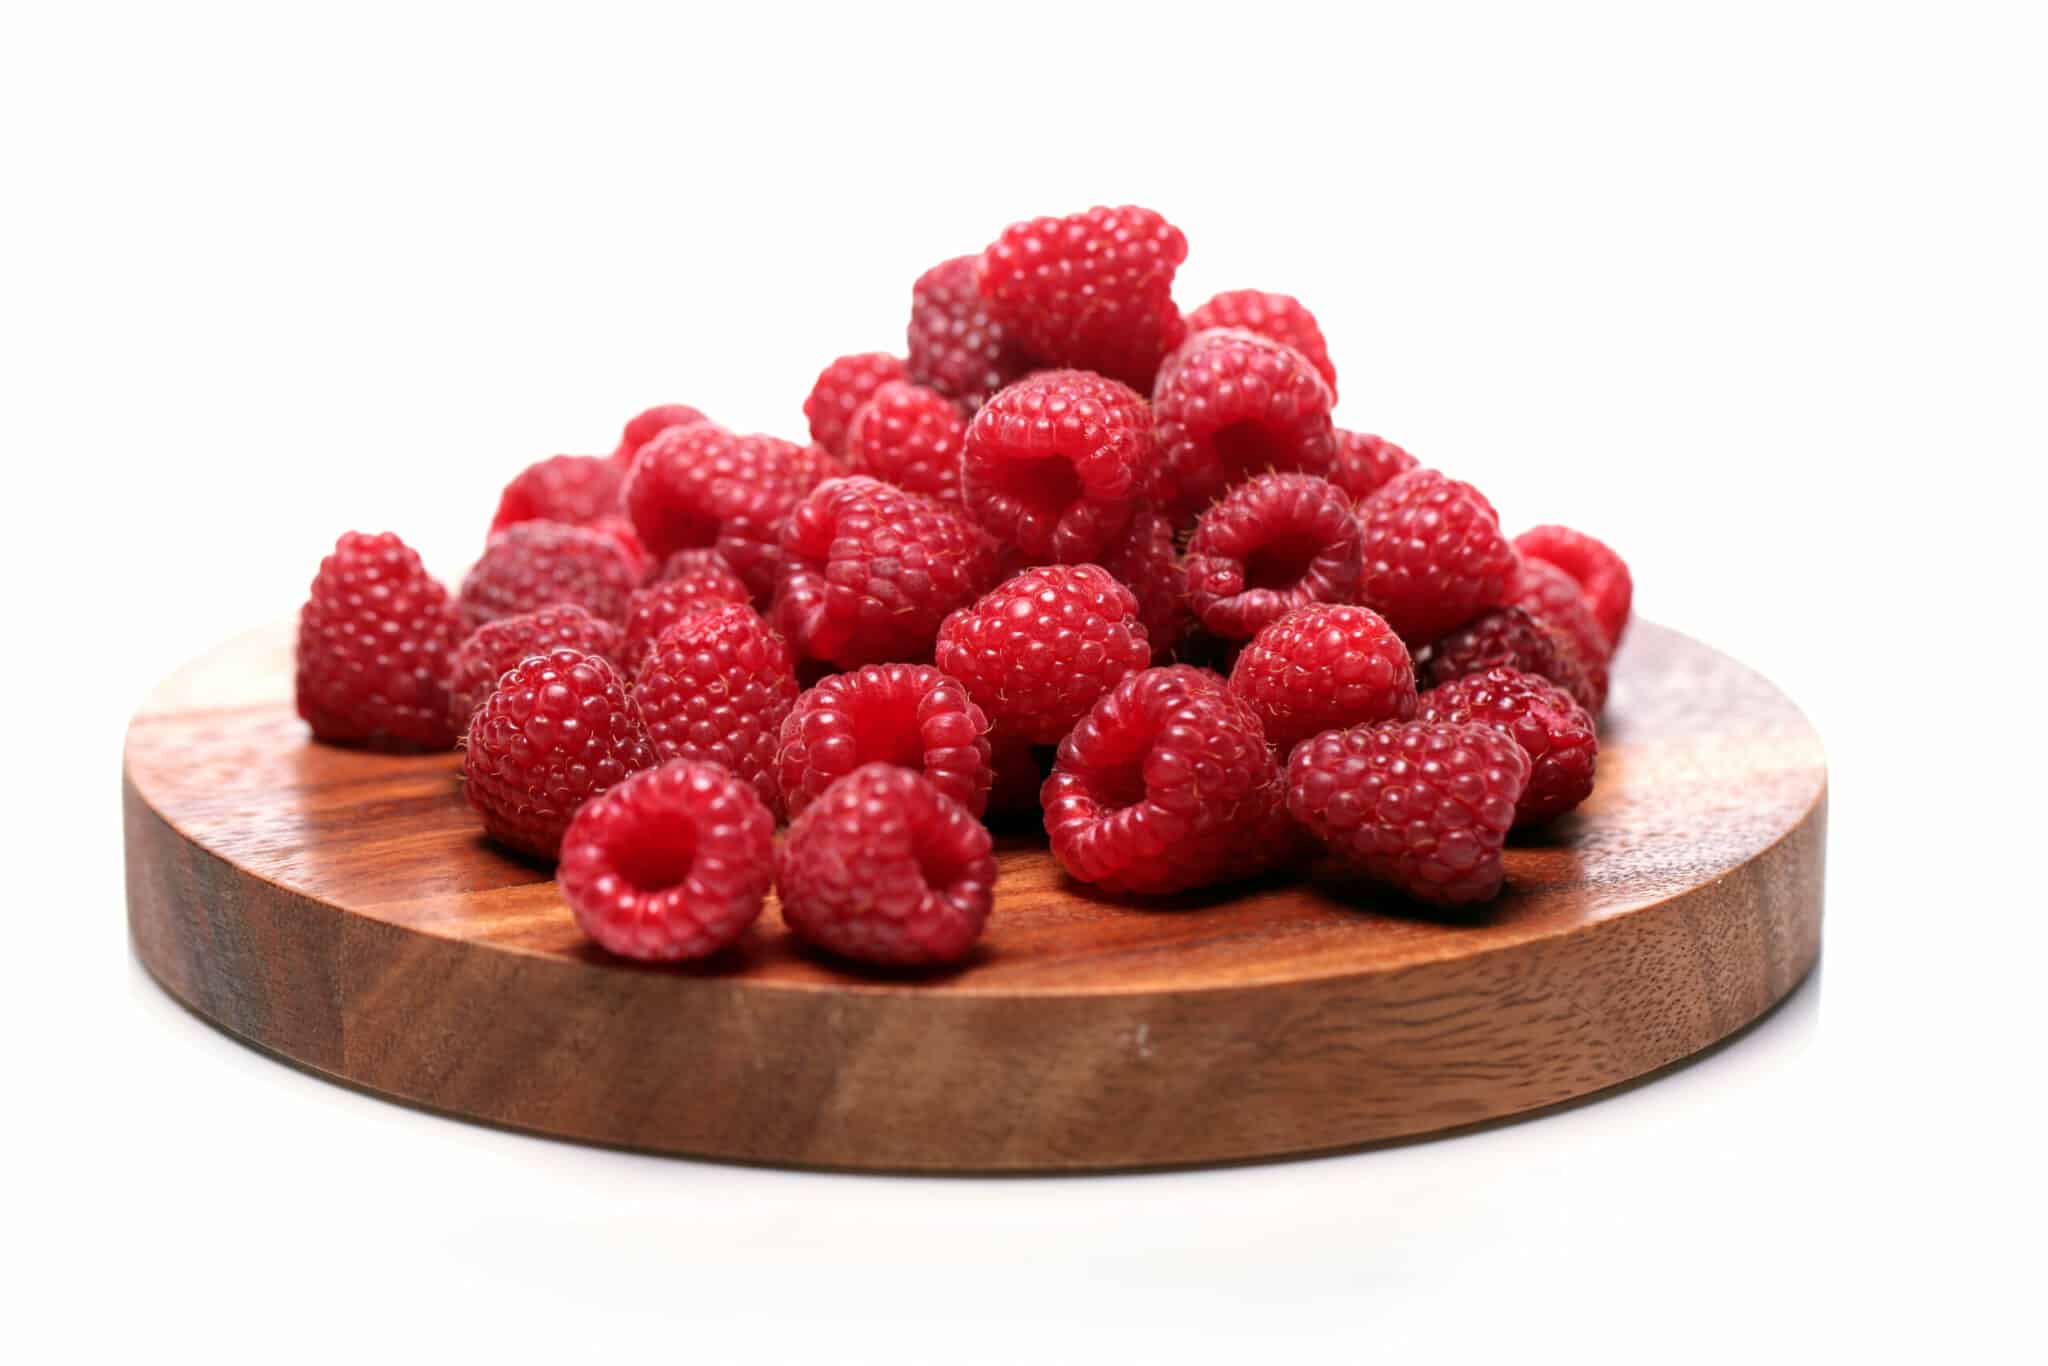 What do Raspberries Taste Like?